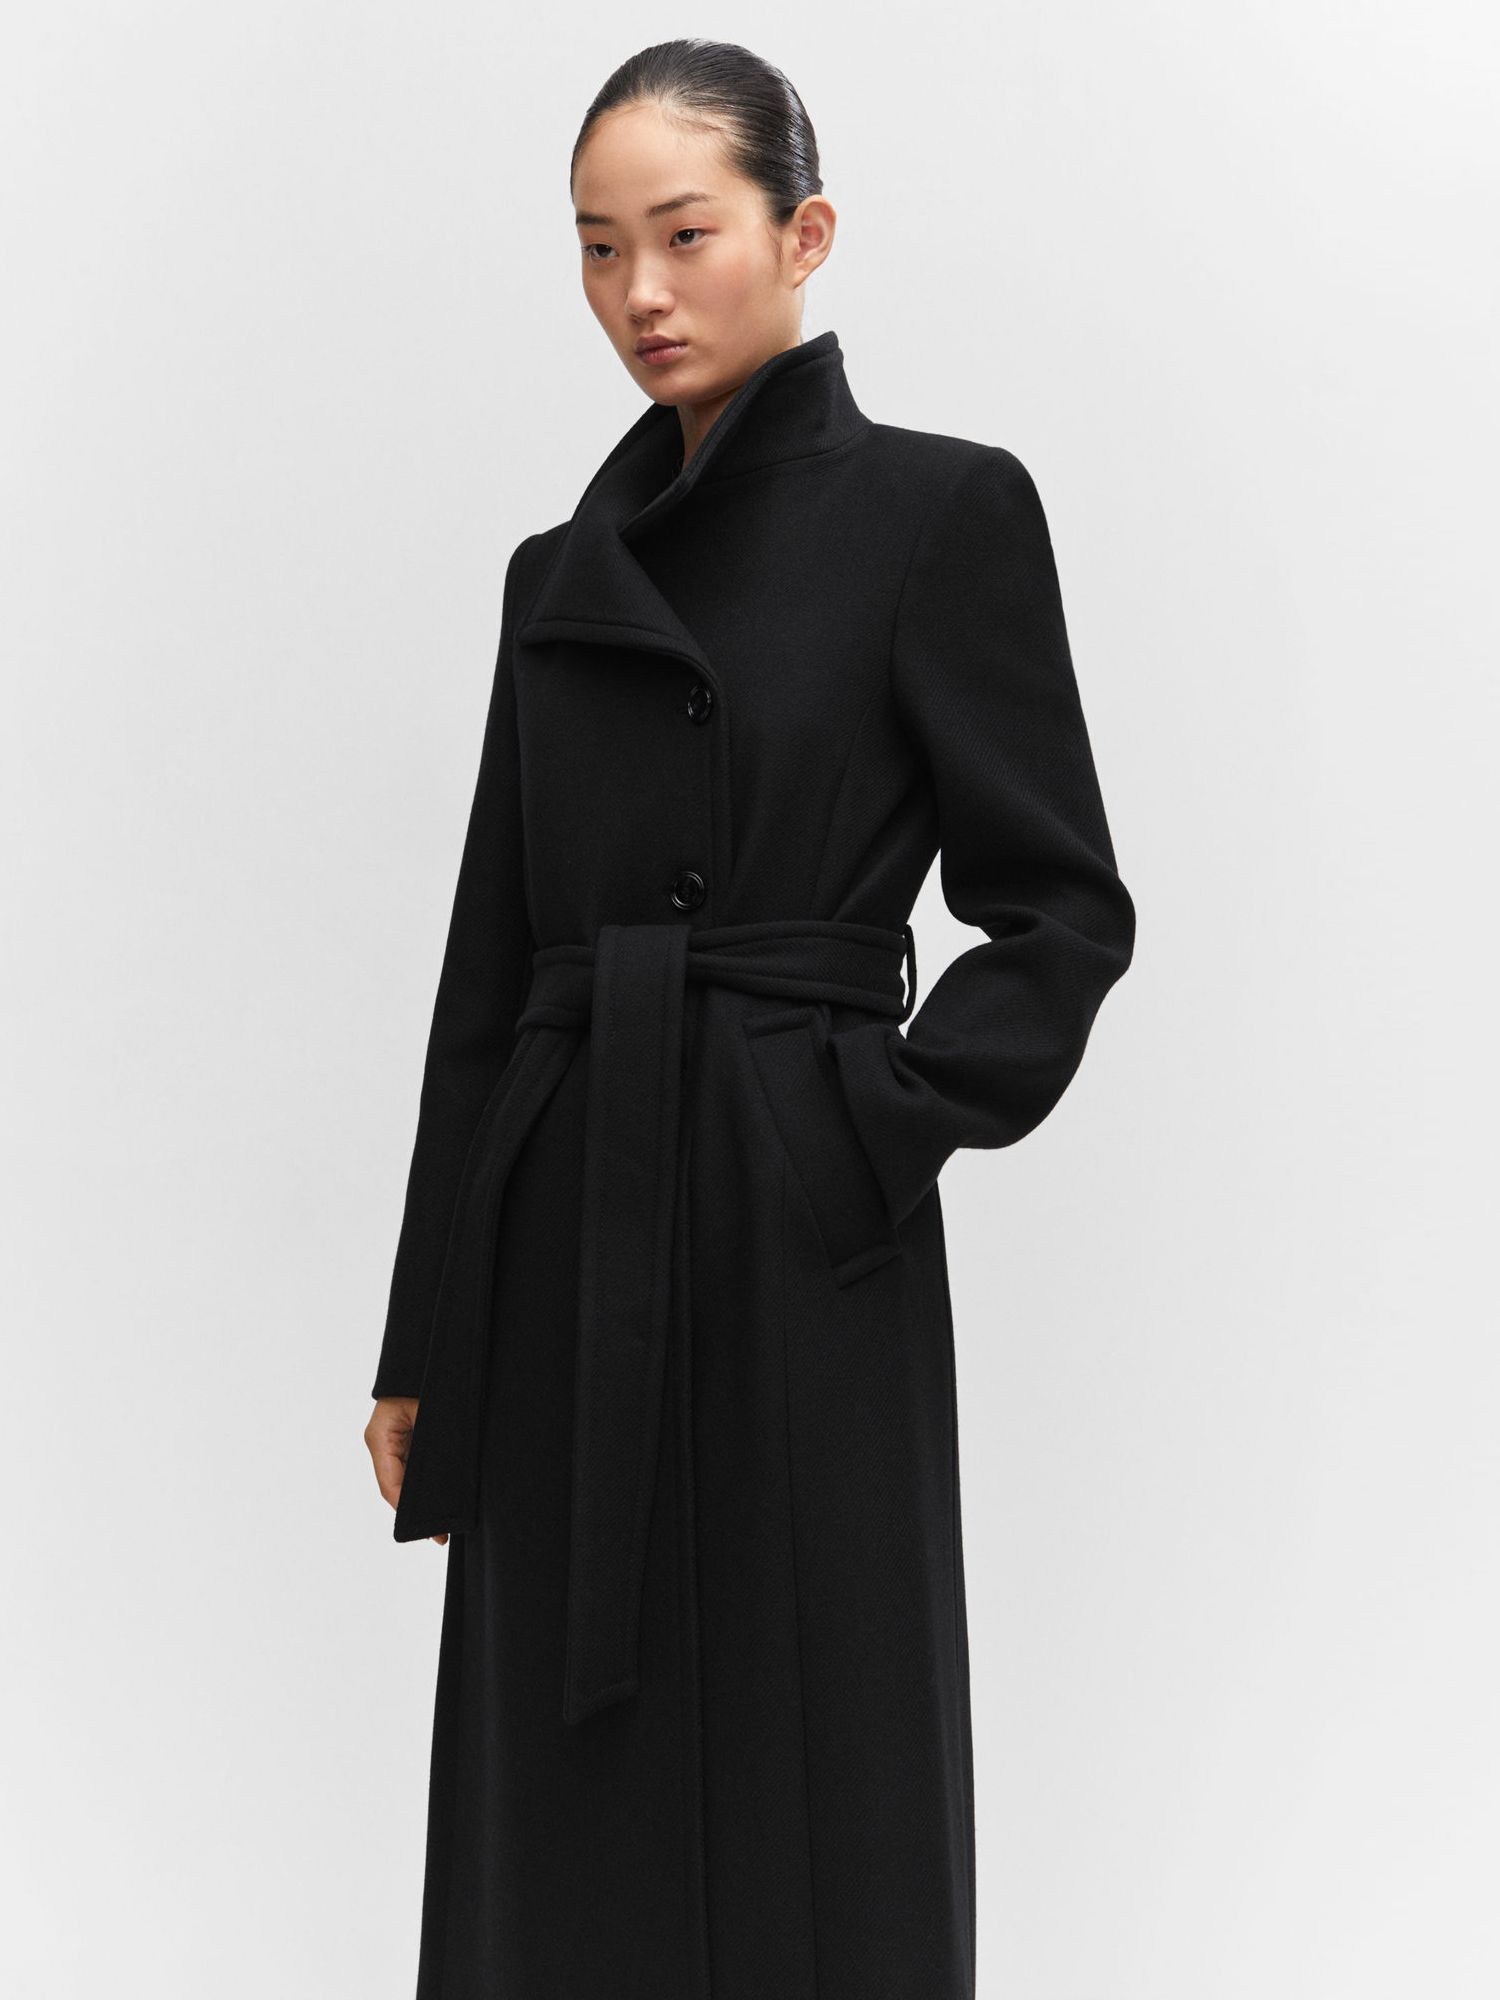 Mango Sirenita Wool Blend Long Belted Coat, Black, XXS